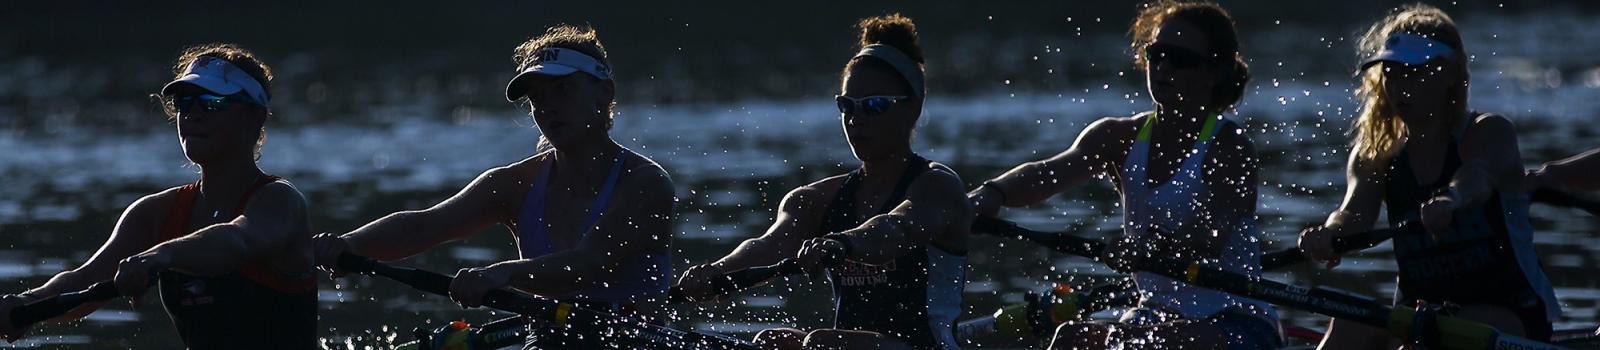 Penn crew team rowing on Schuylkill River